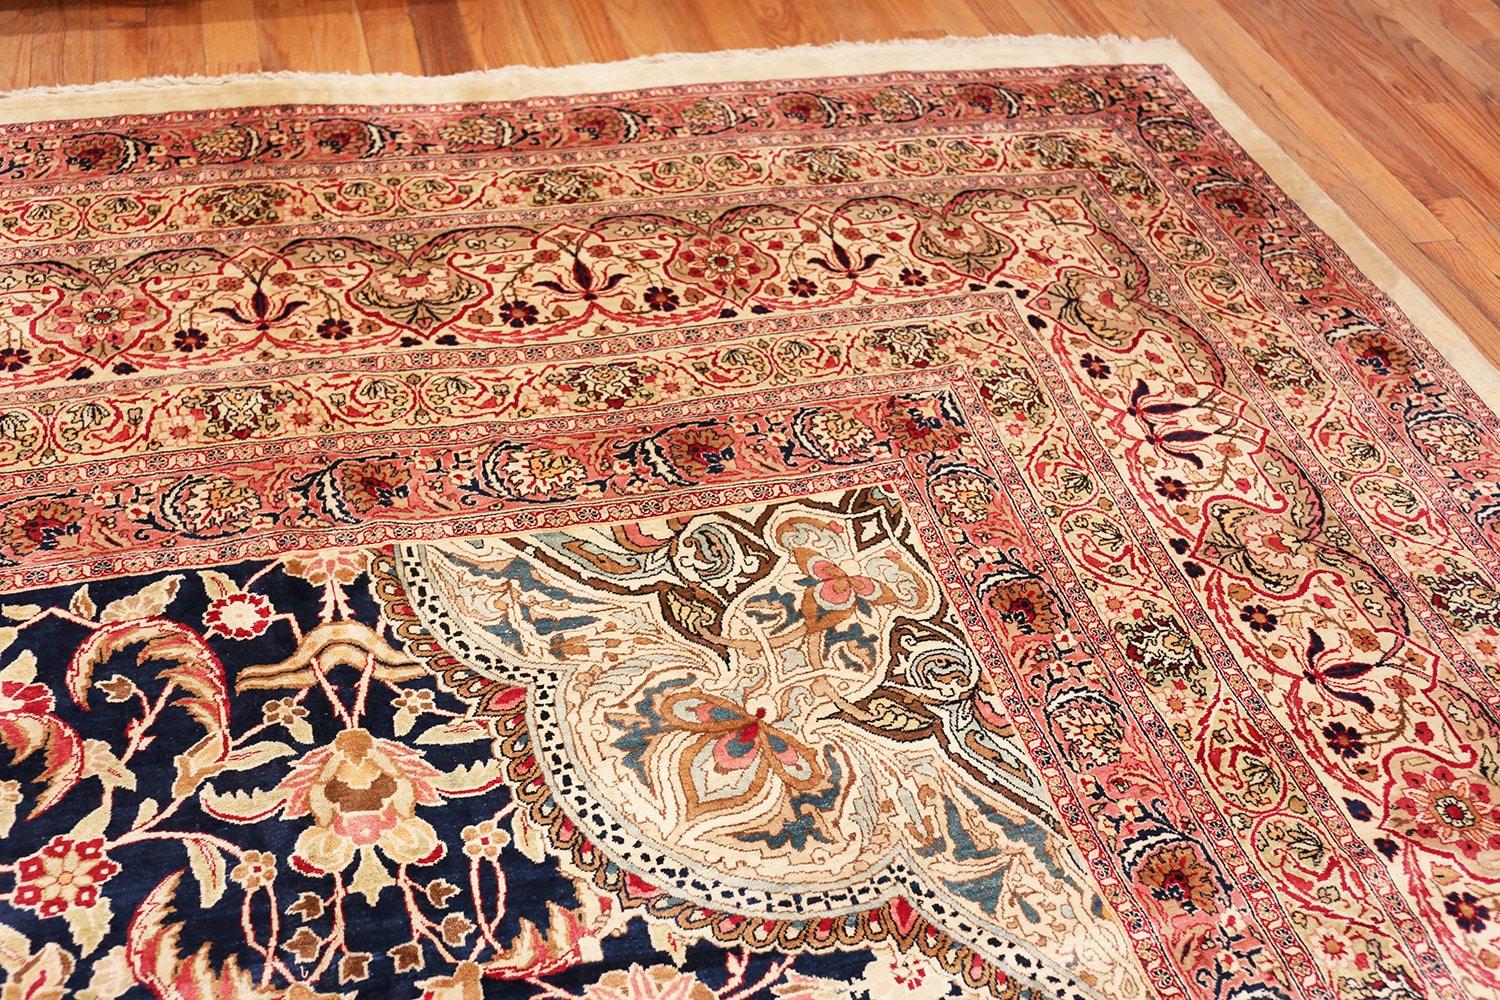 Wool Oversized Antique Persian Kerman Rug. Size: 16' x 22'6